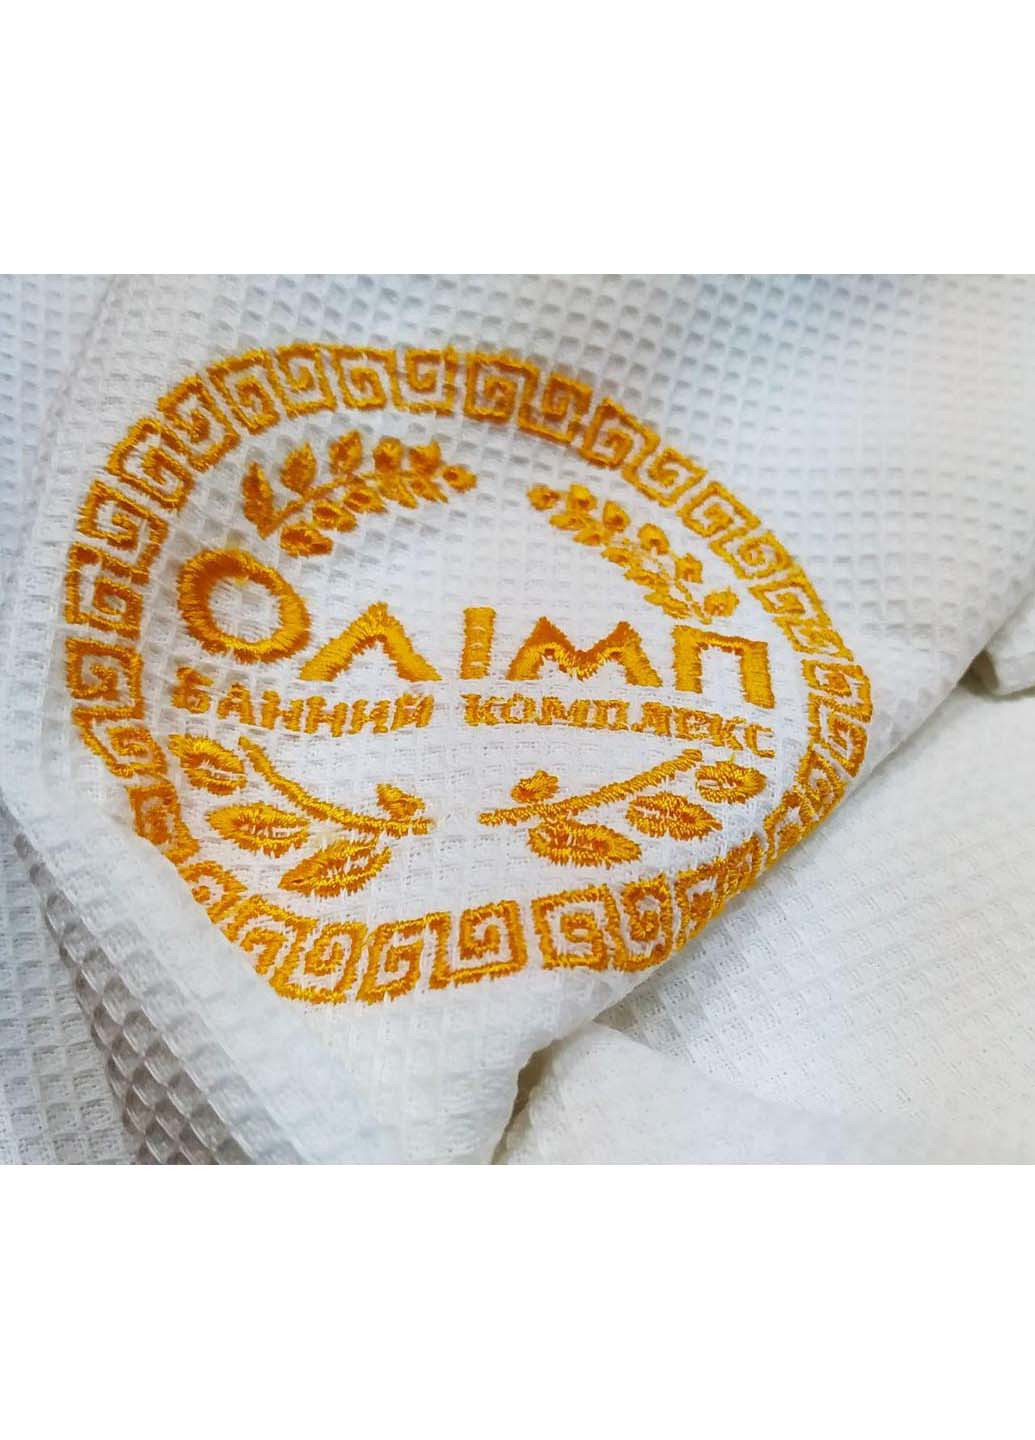 Luxyart вафельное полотенце белый производство - Турция